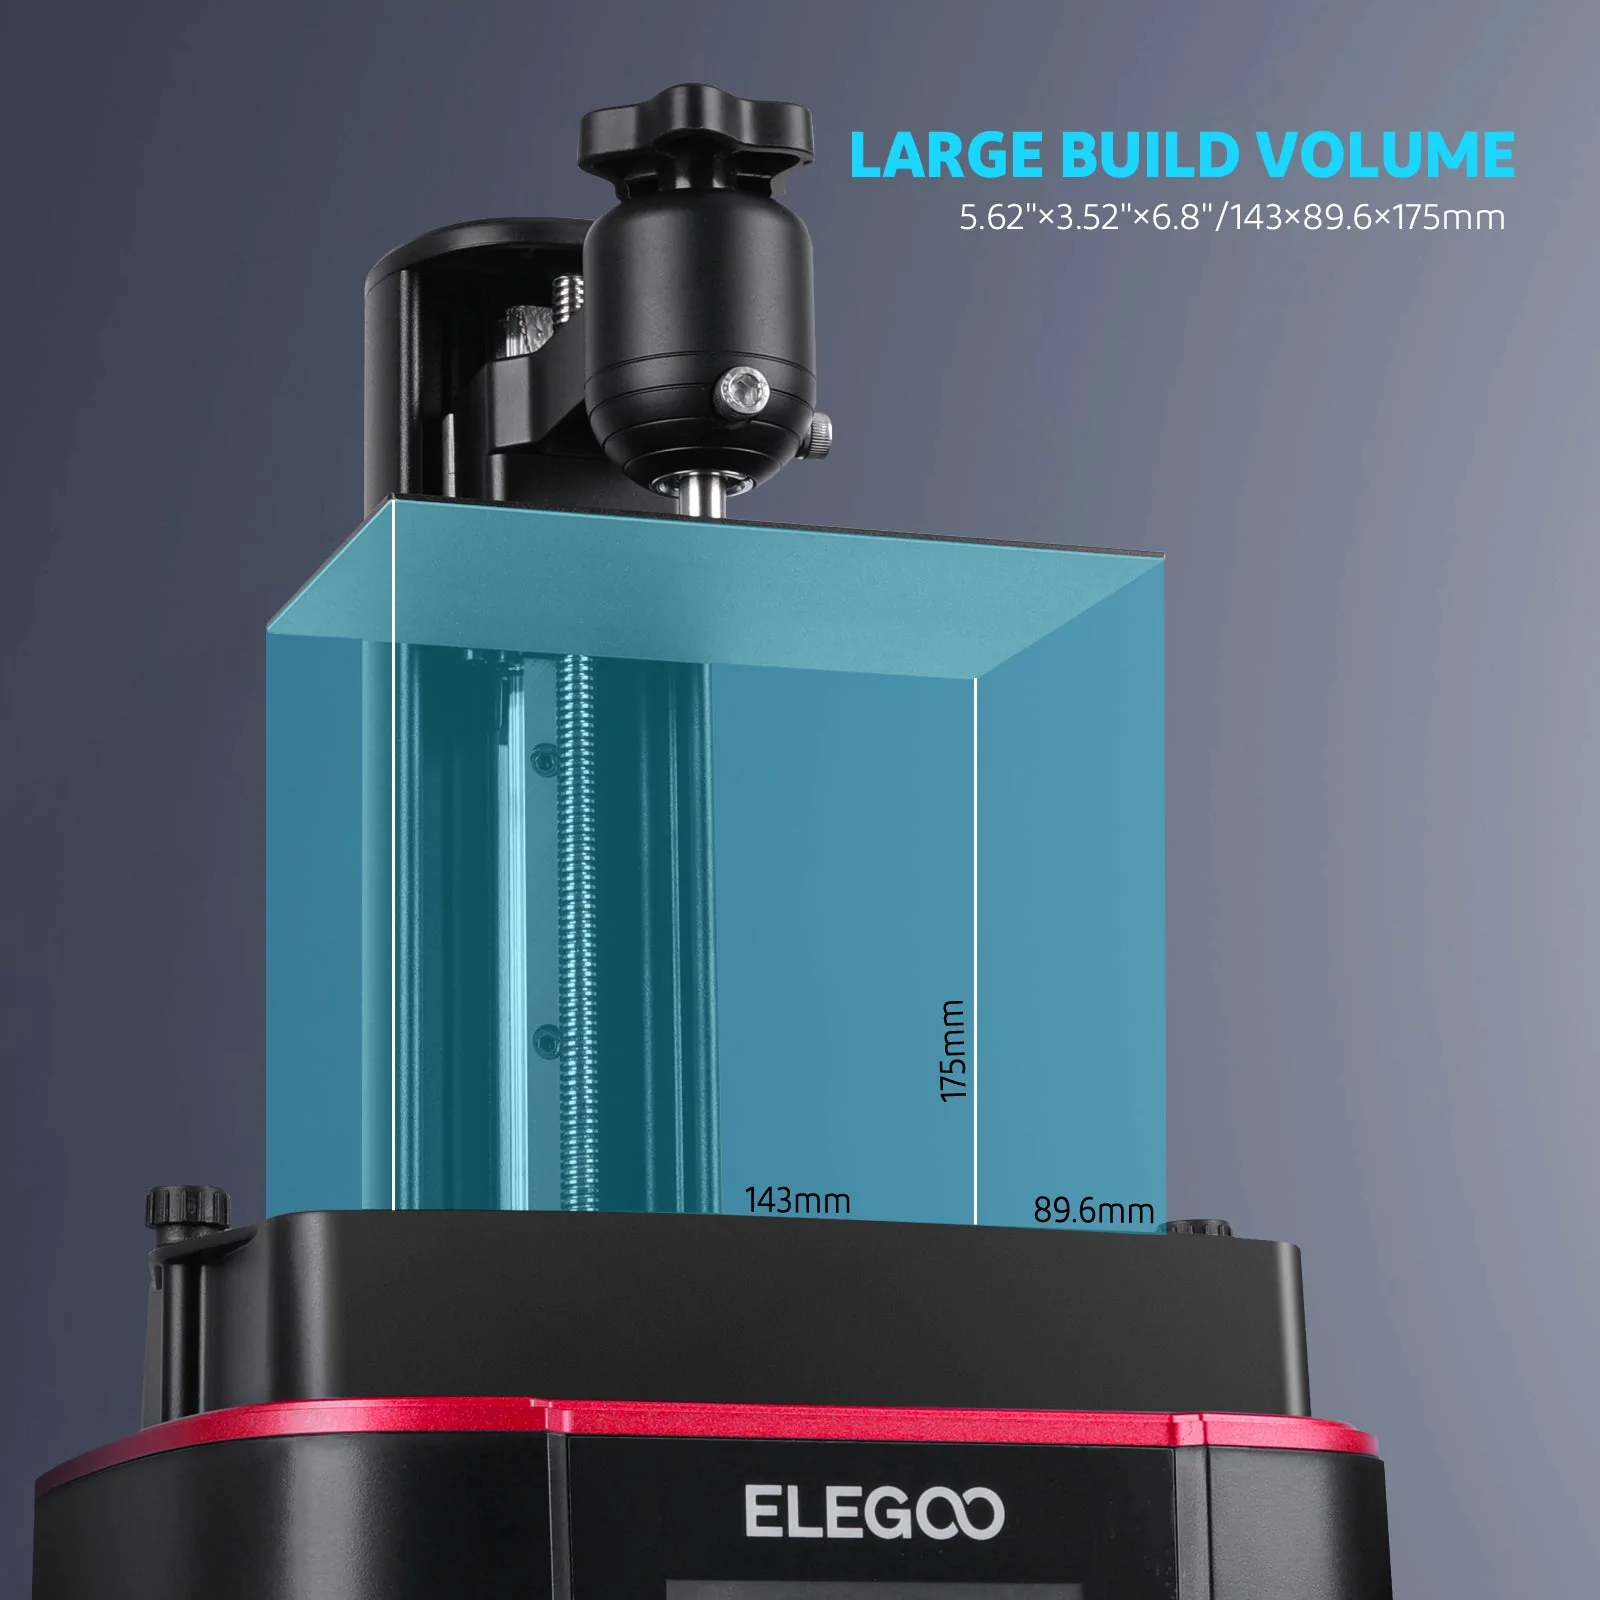 Elegoo Mars 3 Pro 3D Printer comes with Large Build Volume